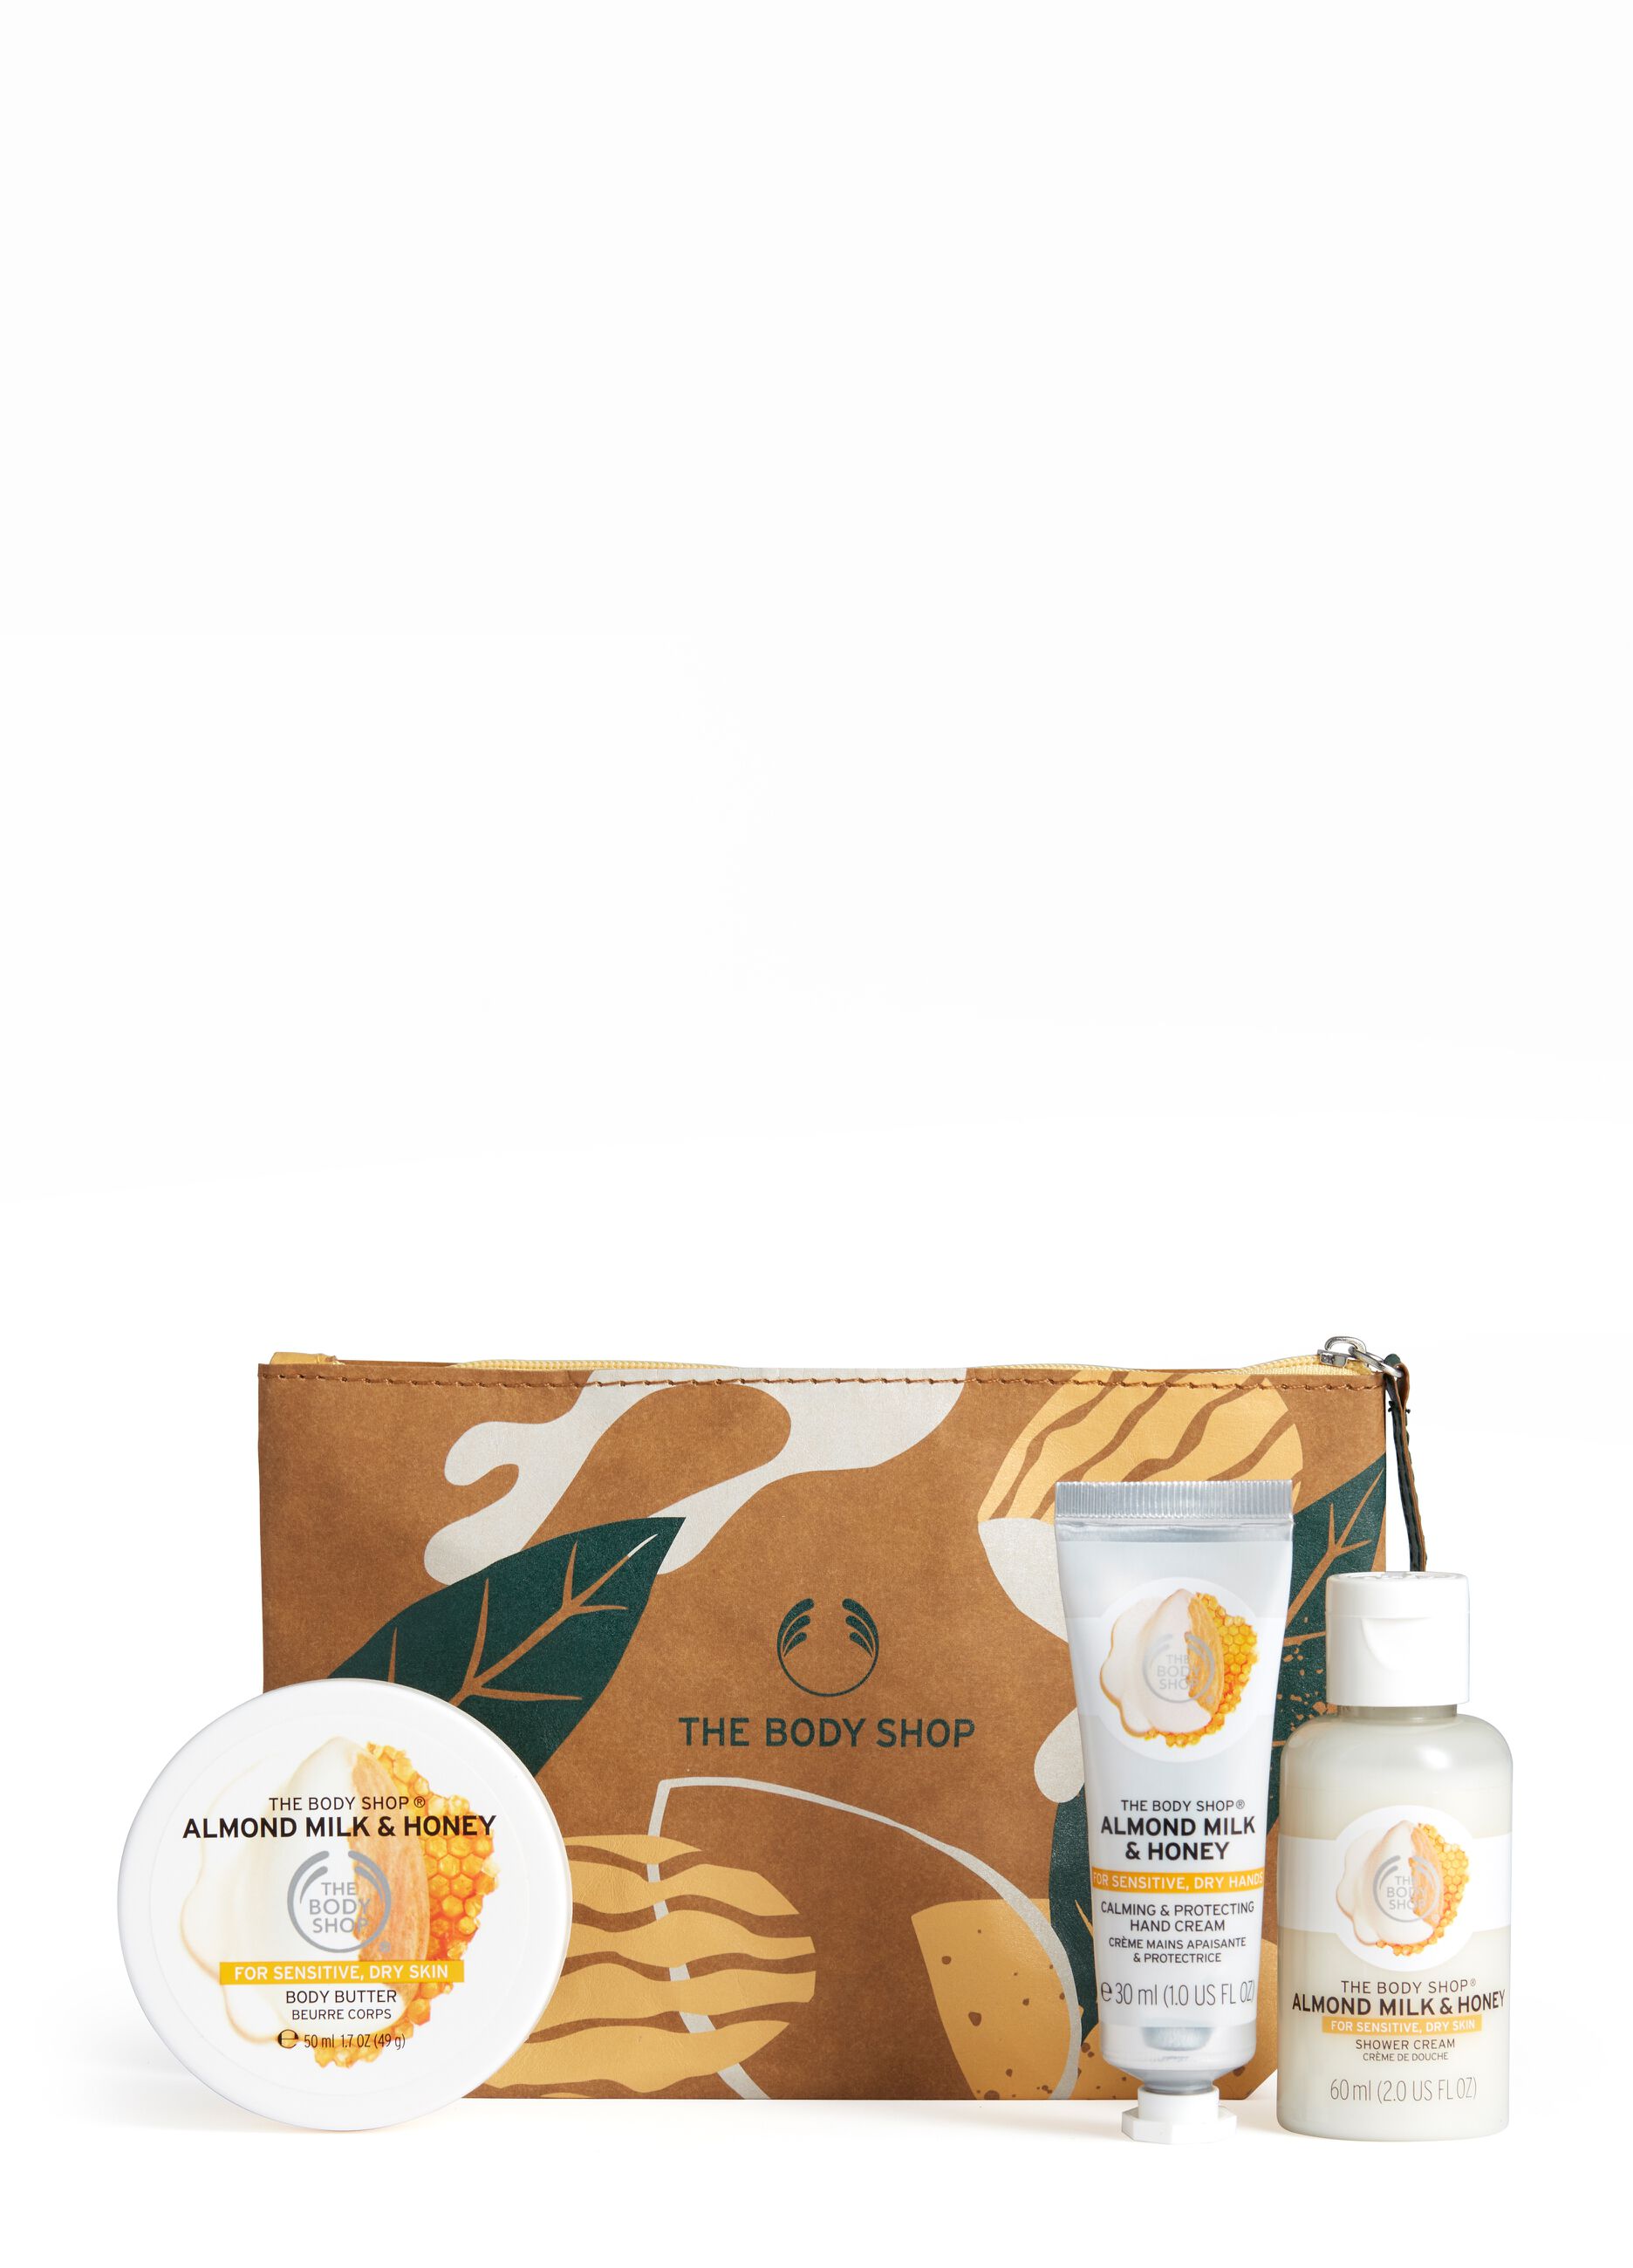 The Body Shop almond milk body care gift bag.